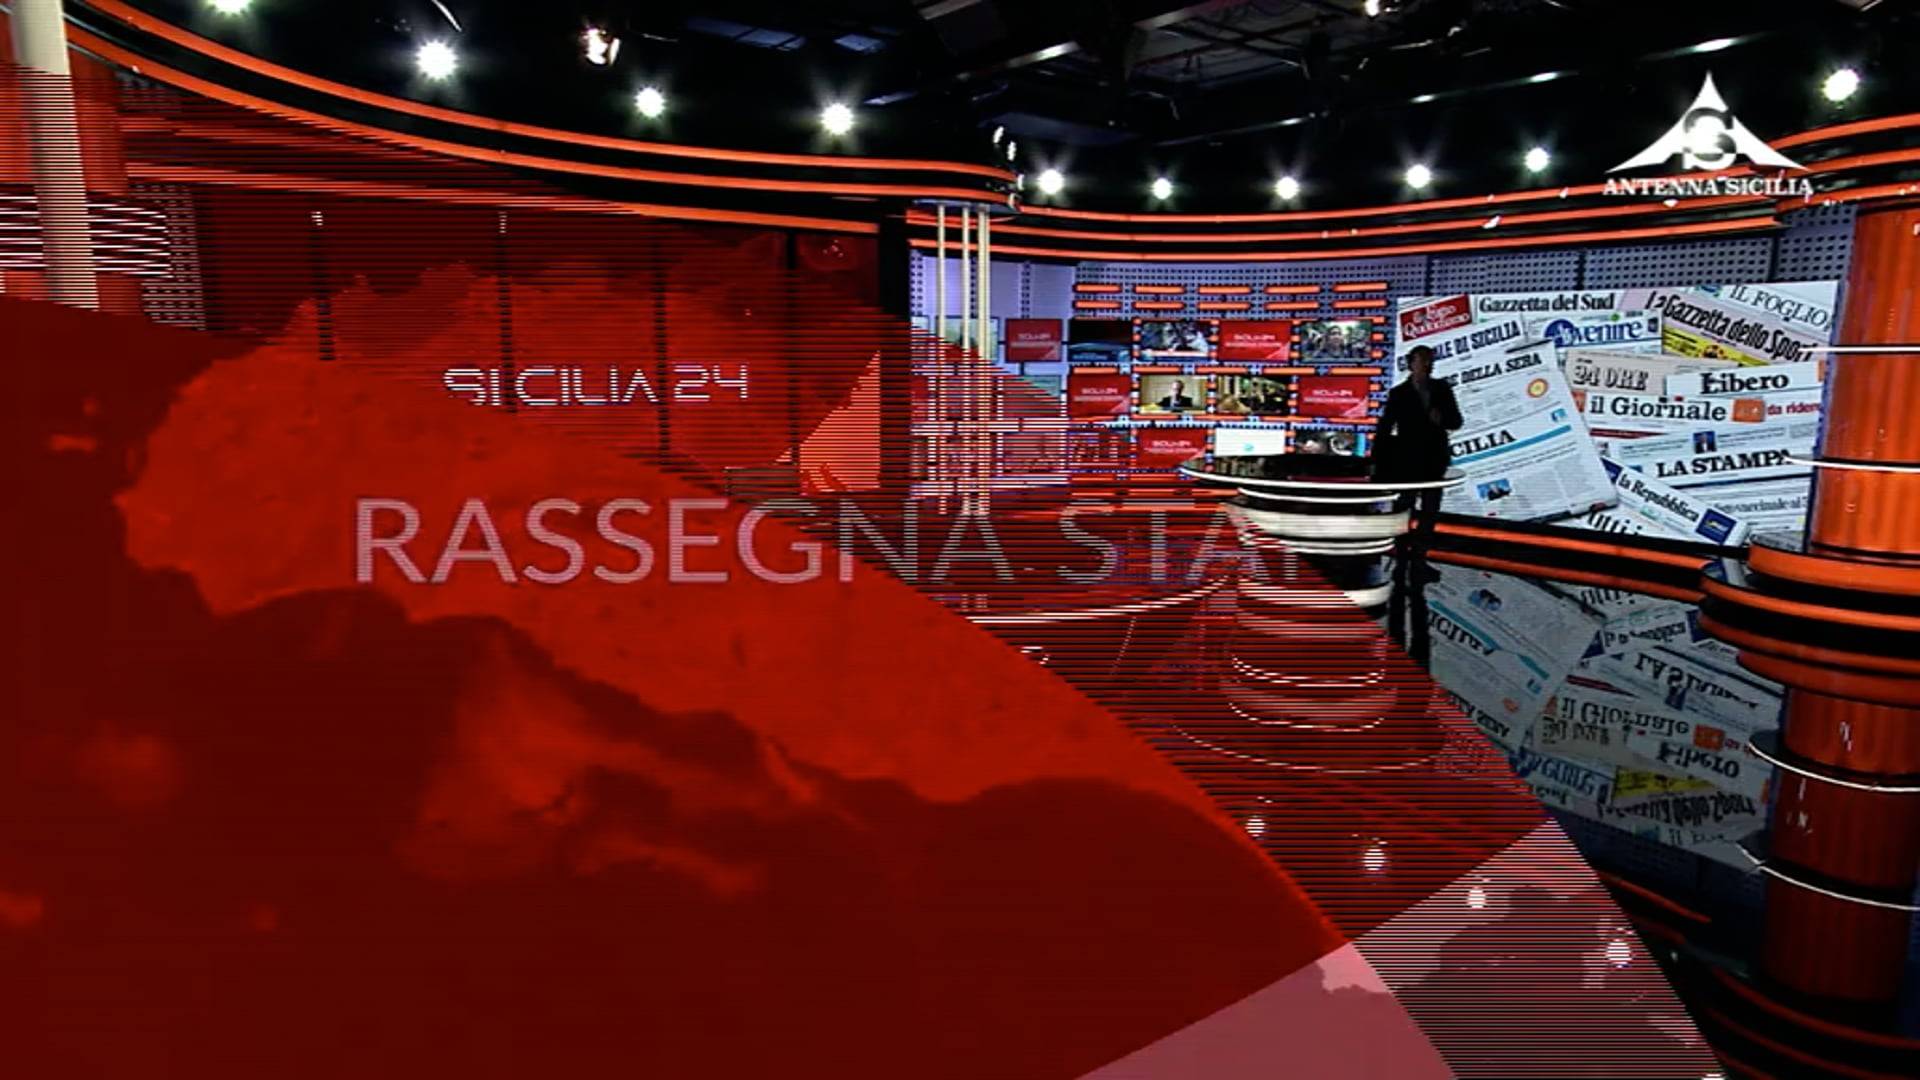 sicilia24-rassegna-stampa-09-marzo-2022-vimeo-thumbnail.jpg